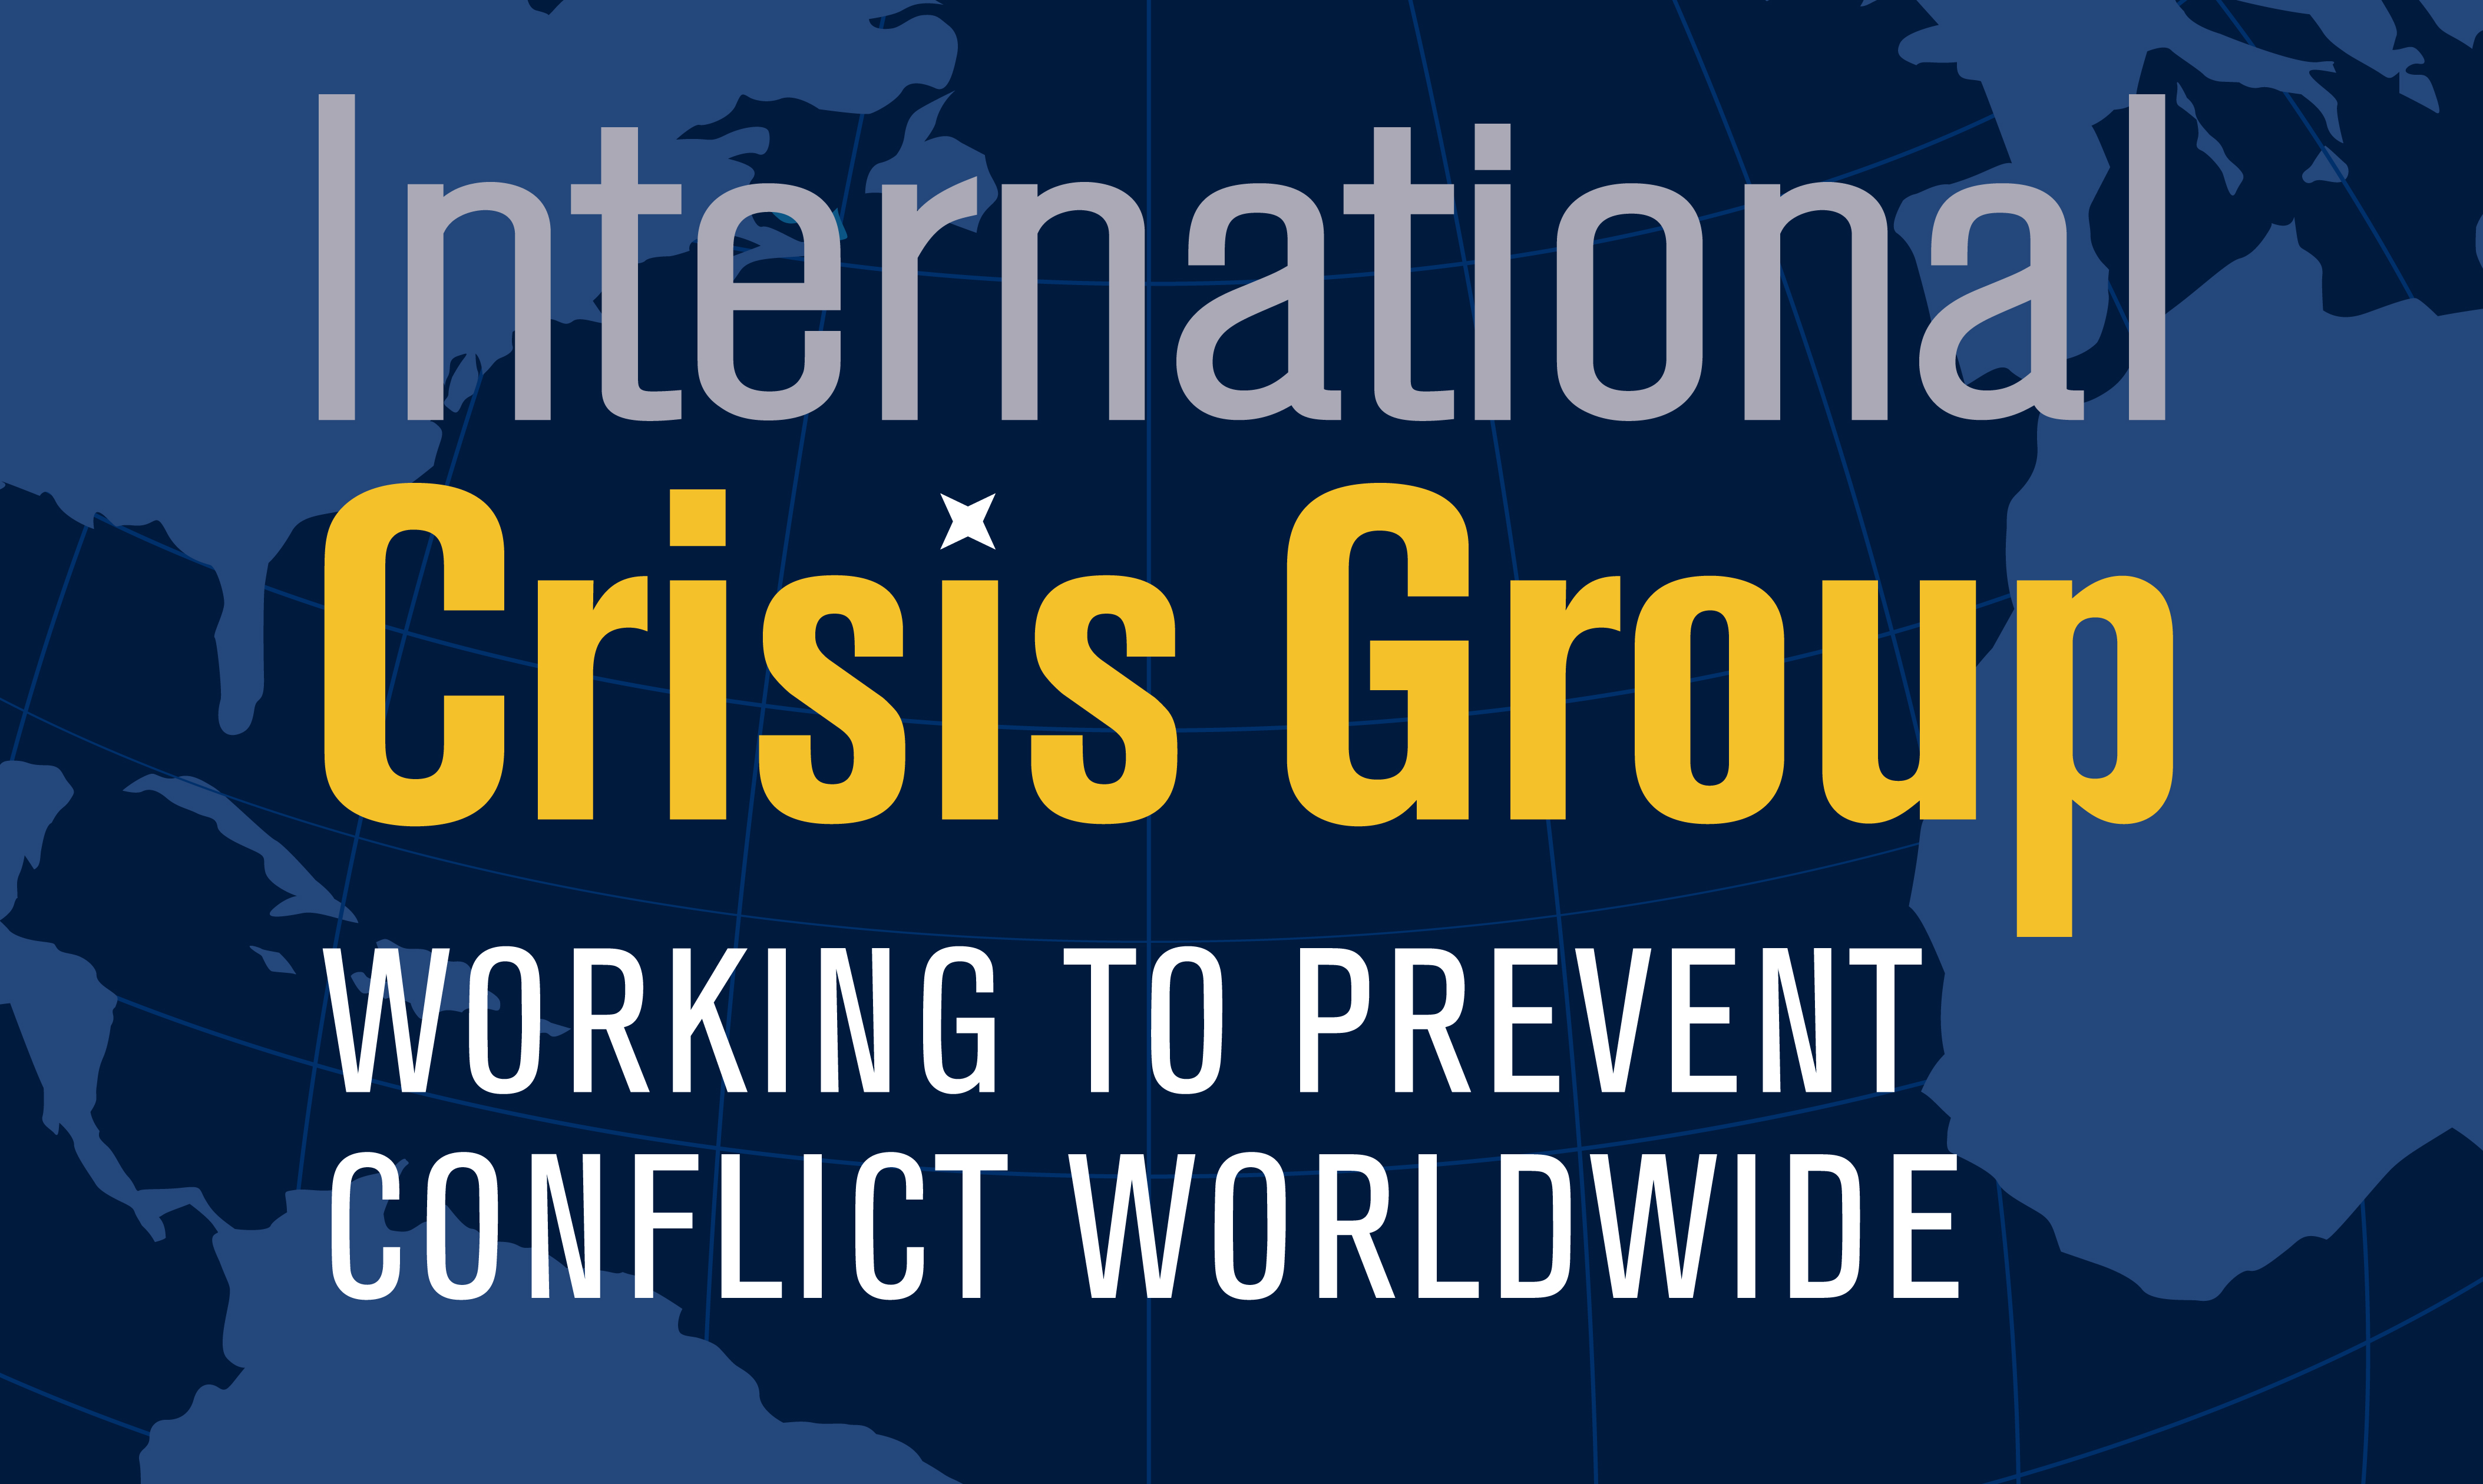 International Crisis Group logo (source: wordpress.com)